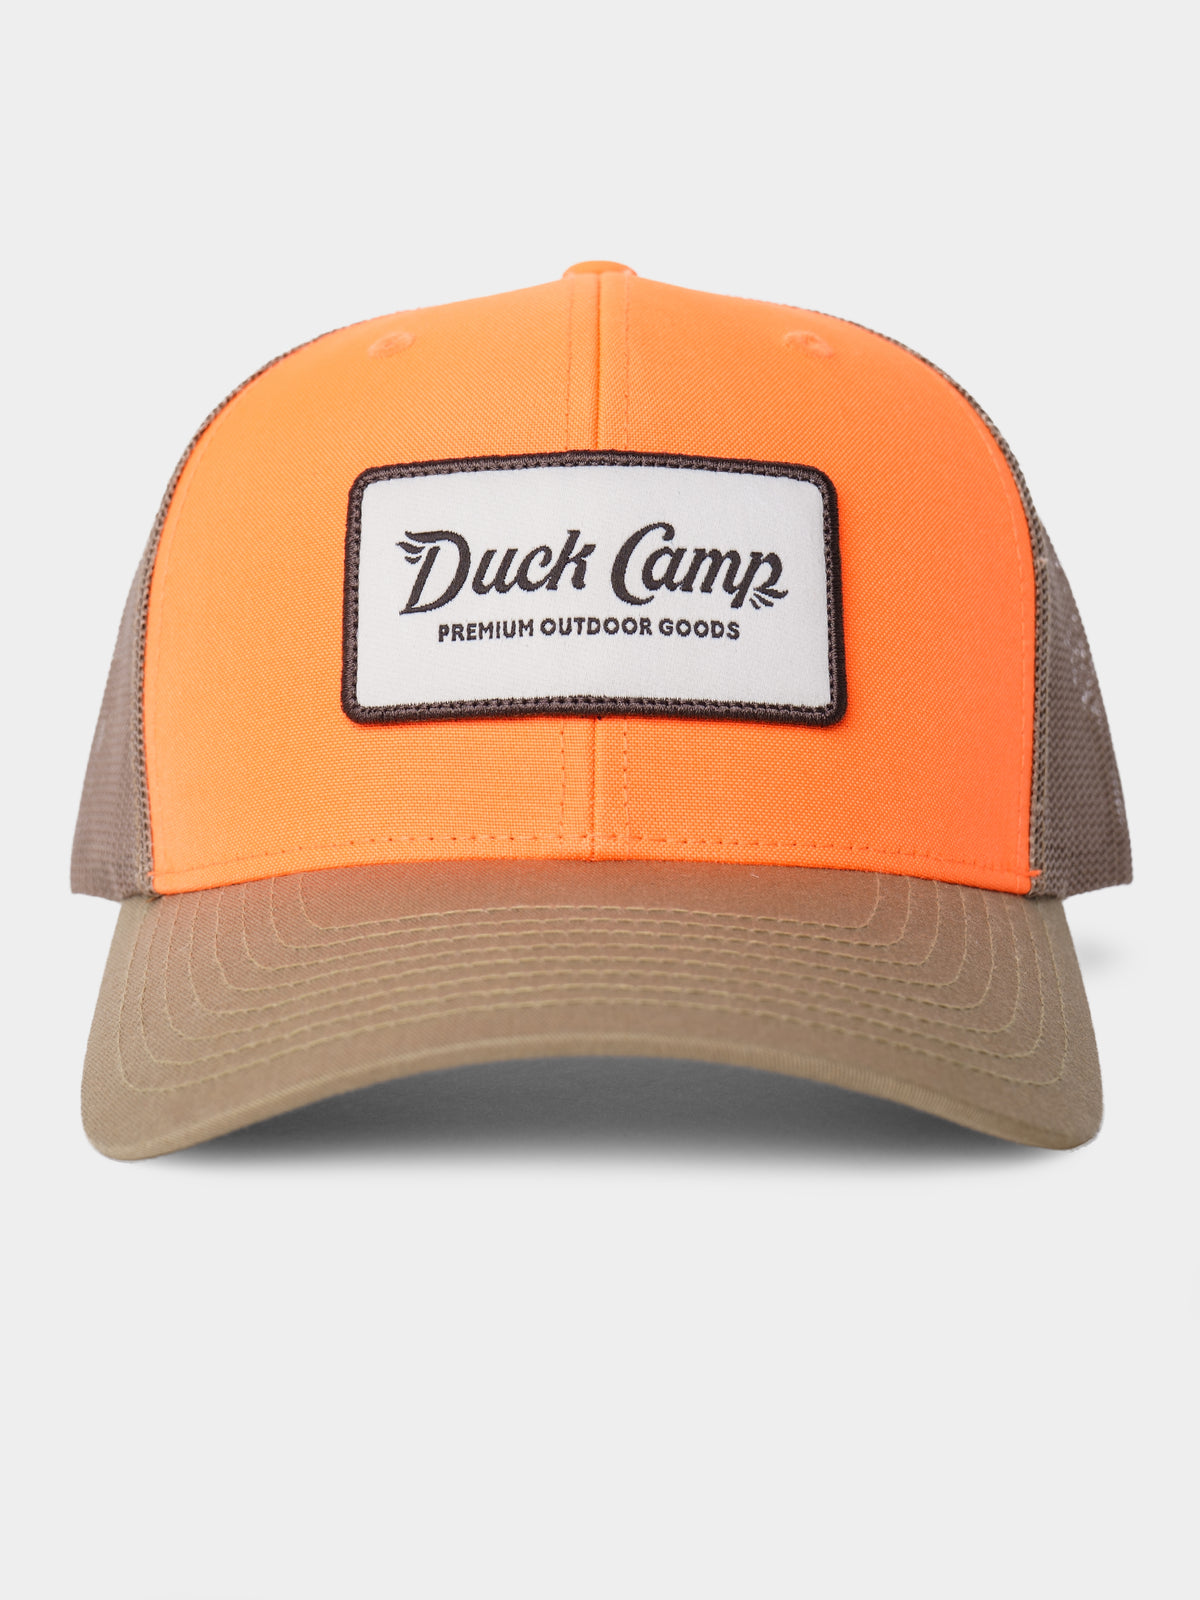 Duck Camp Trucker Hat - Wheat + Blaze